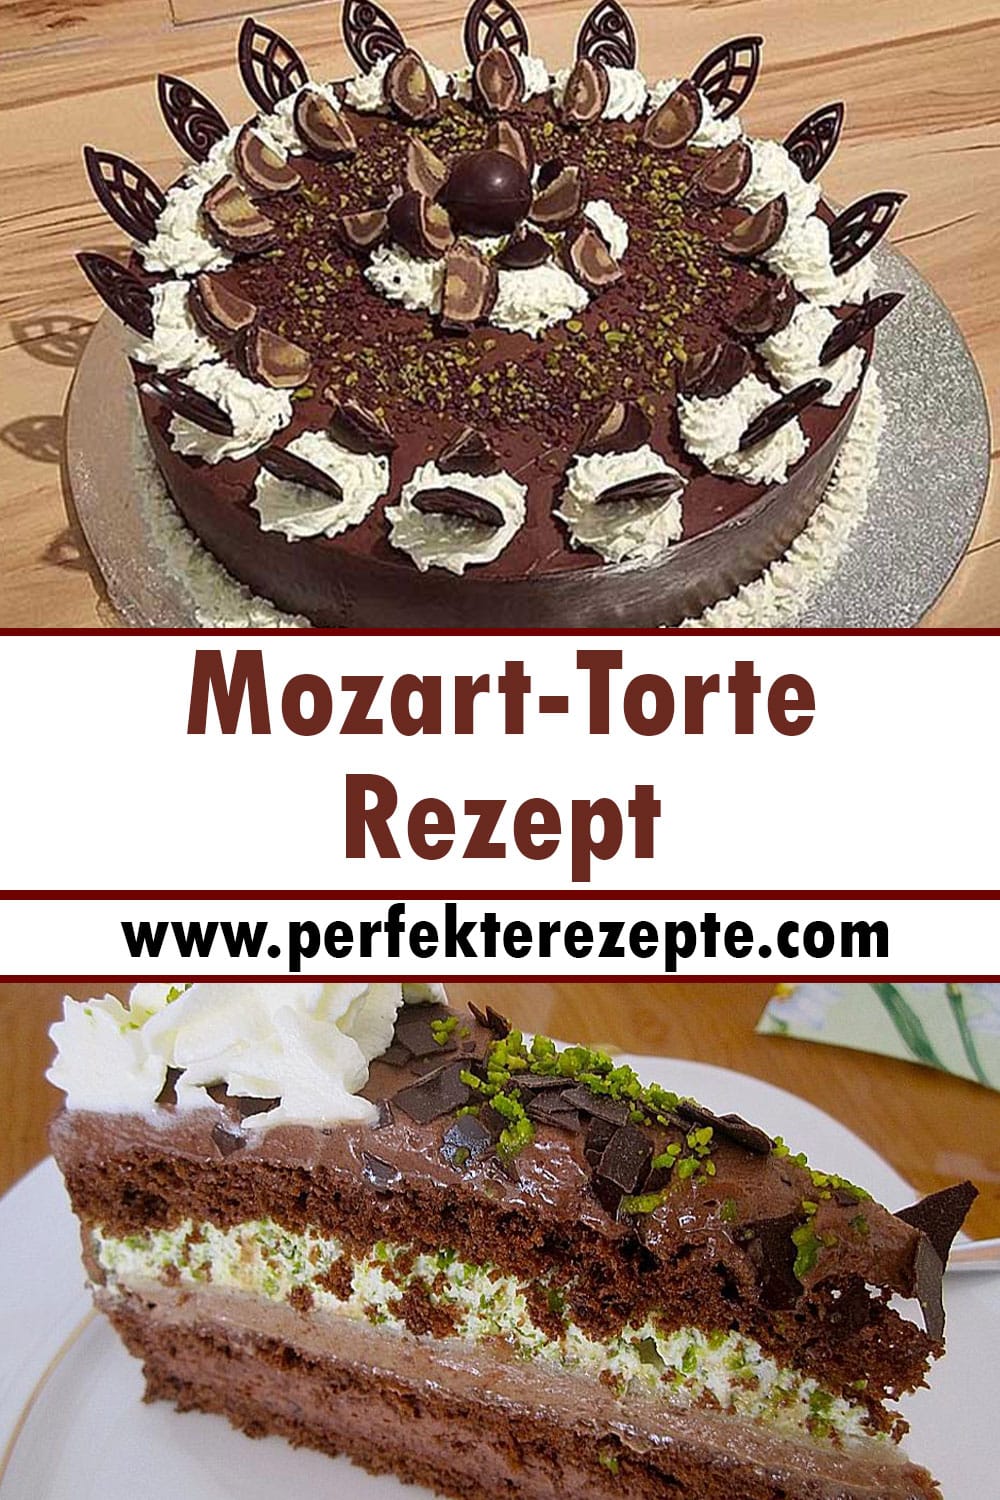 Mozart-Torte Rezept